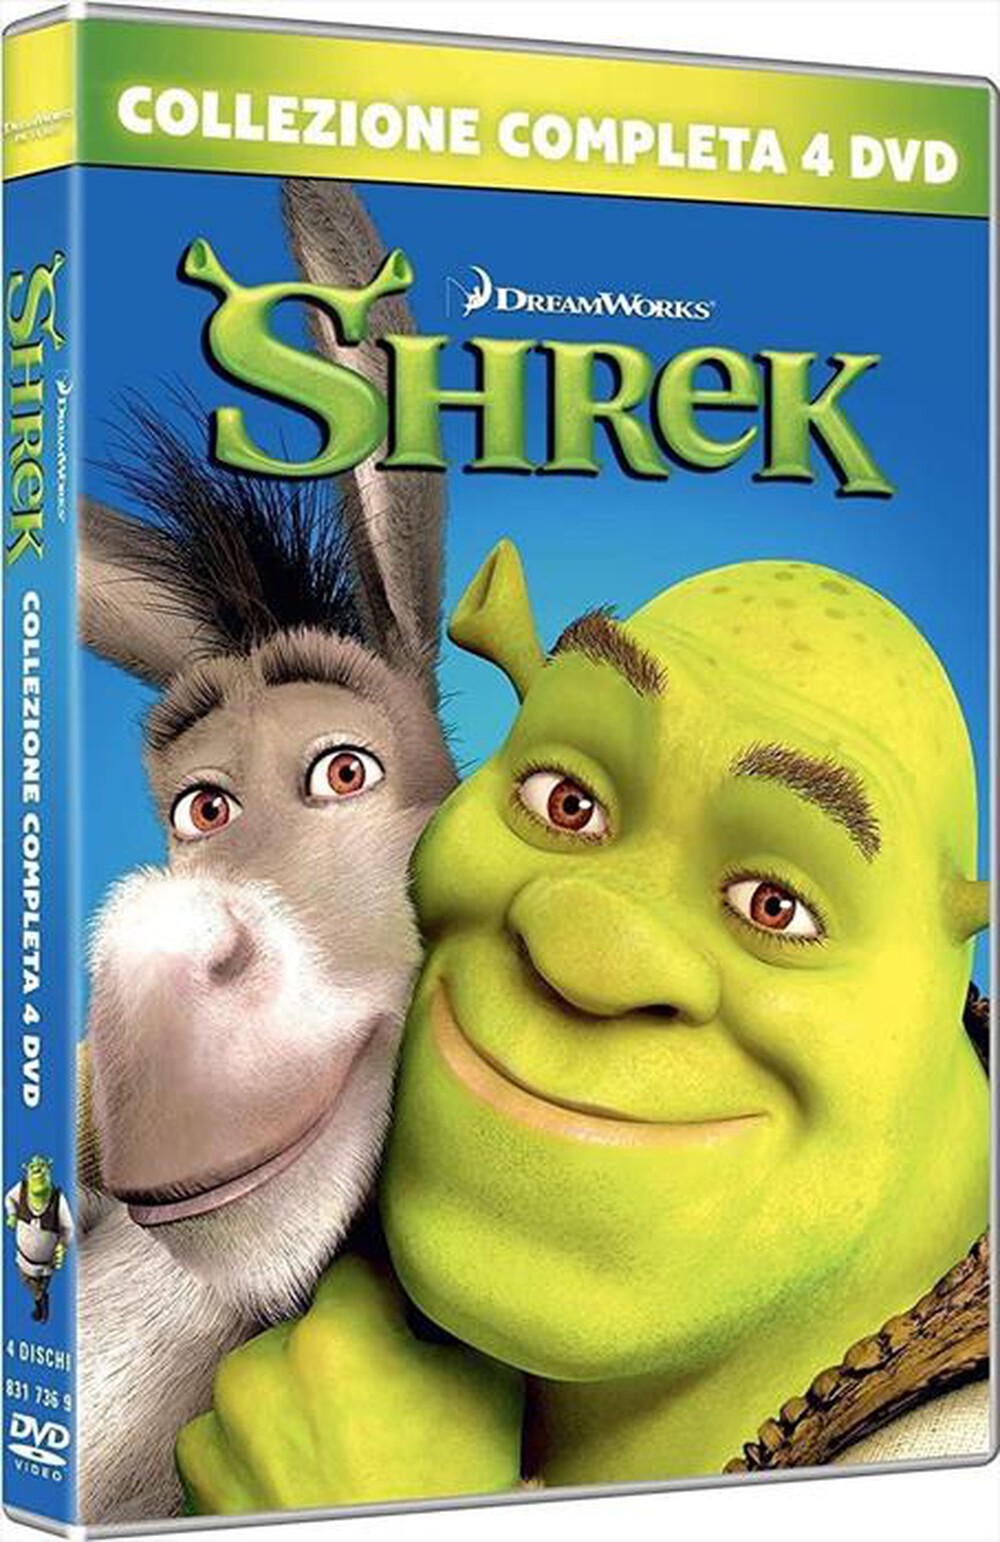 "WARNER HOME VIDEO - Shrek 1-4 Collection (4 Dvd)"